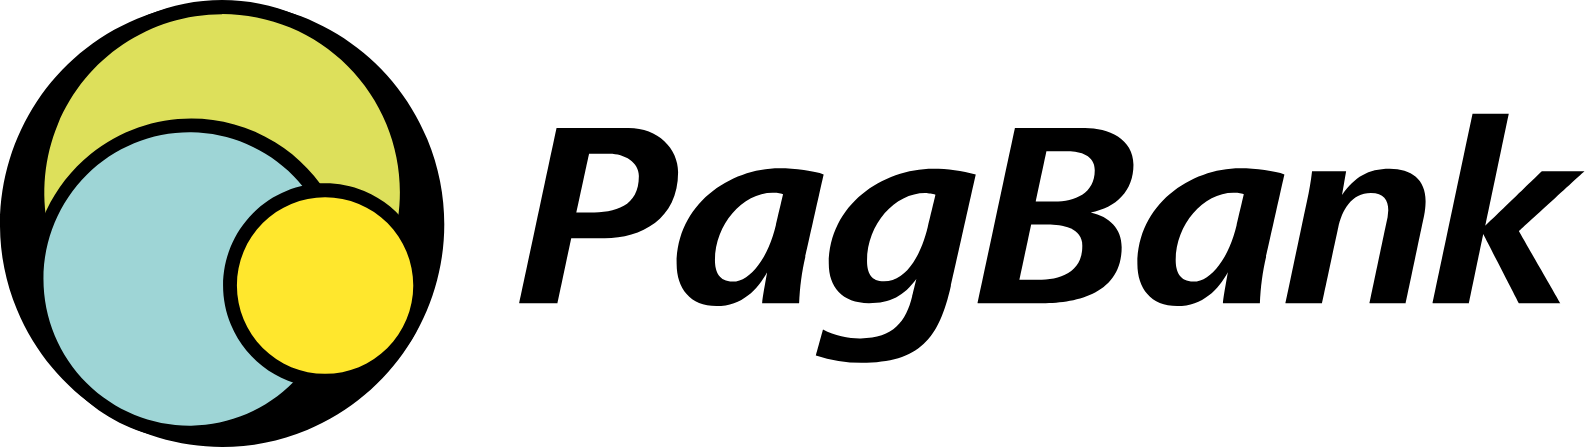 PagSeguro logo large (transparent PNG)